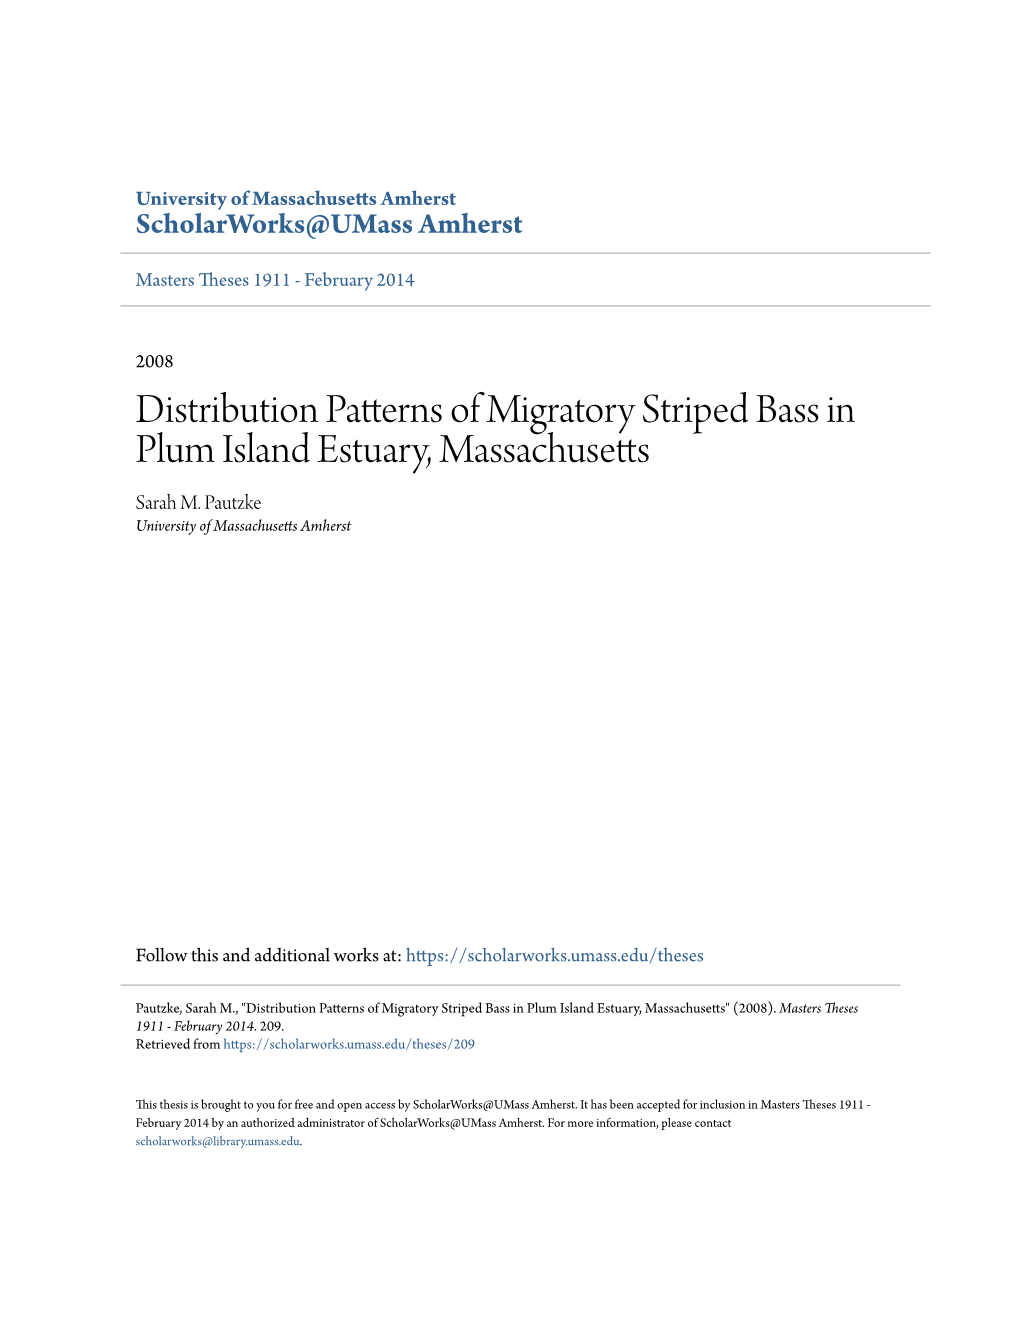 Distribution Patterns of Migratory Striped Bass in Plum Island Estuary, Massachusetts Sarah M